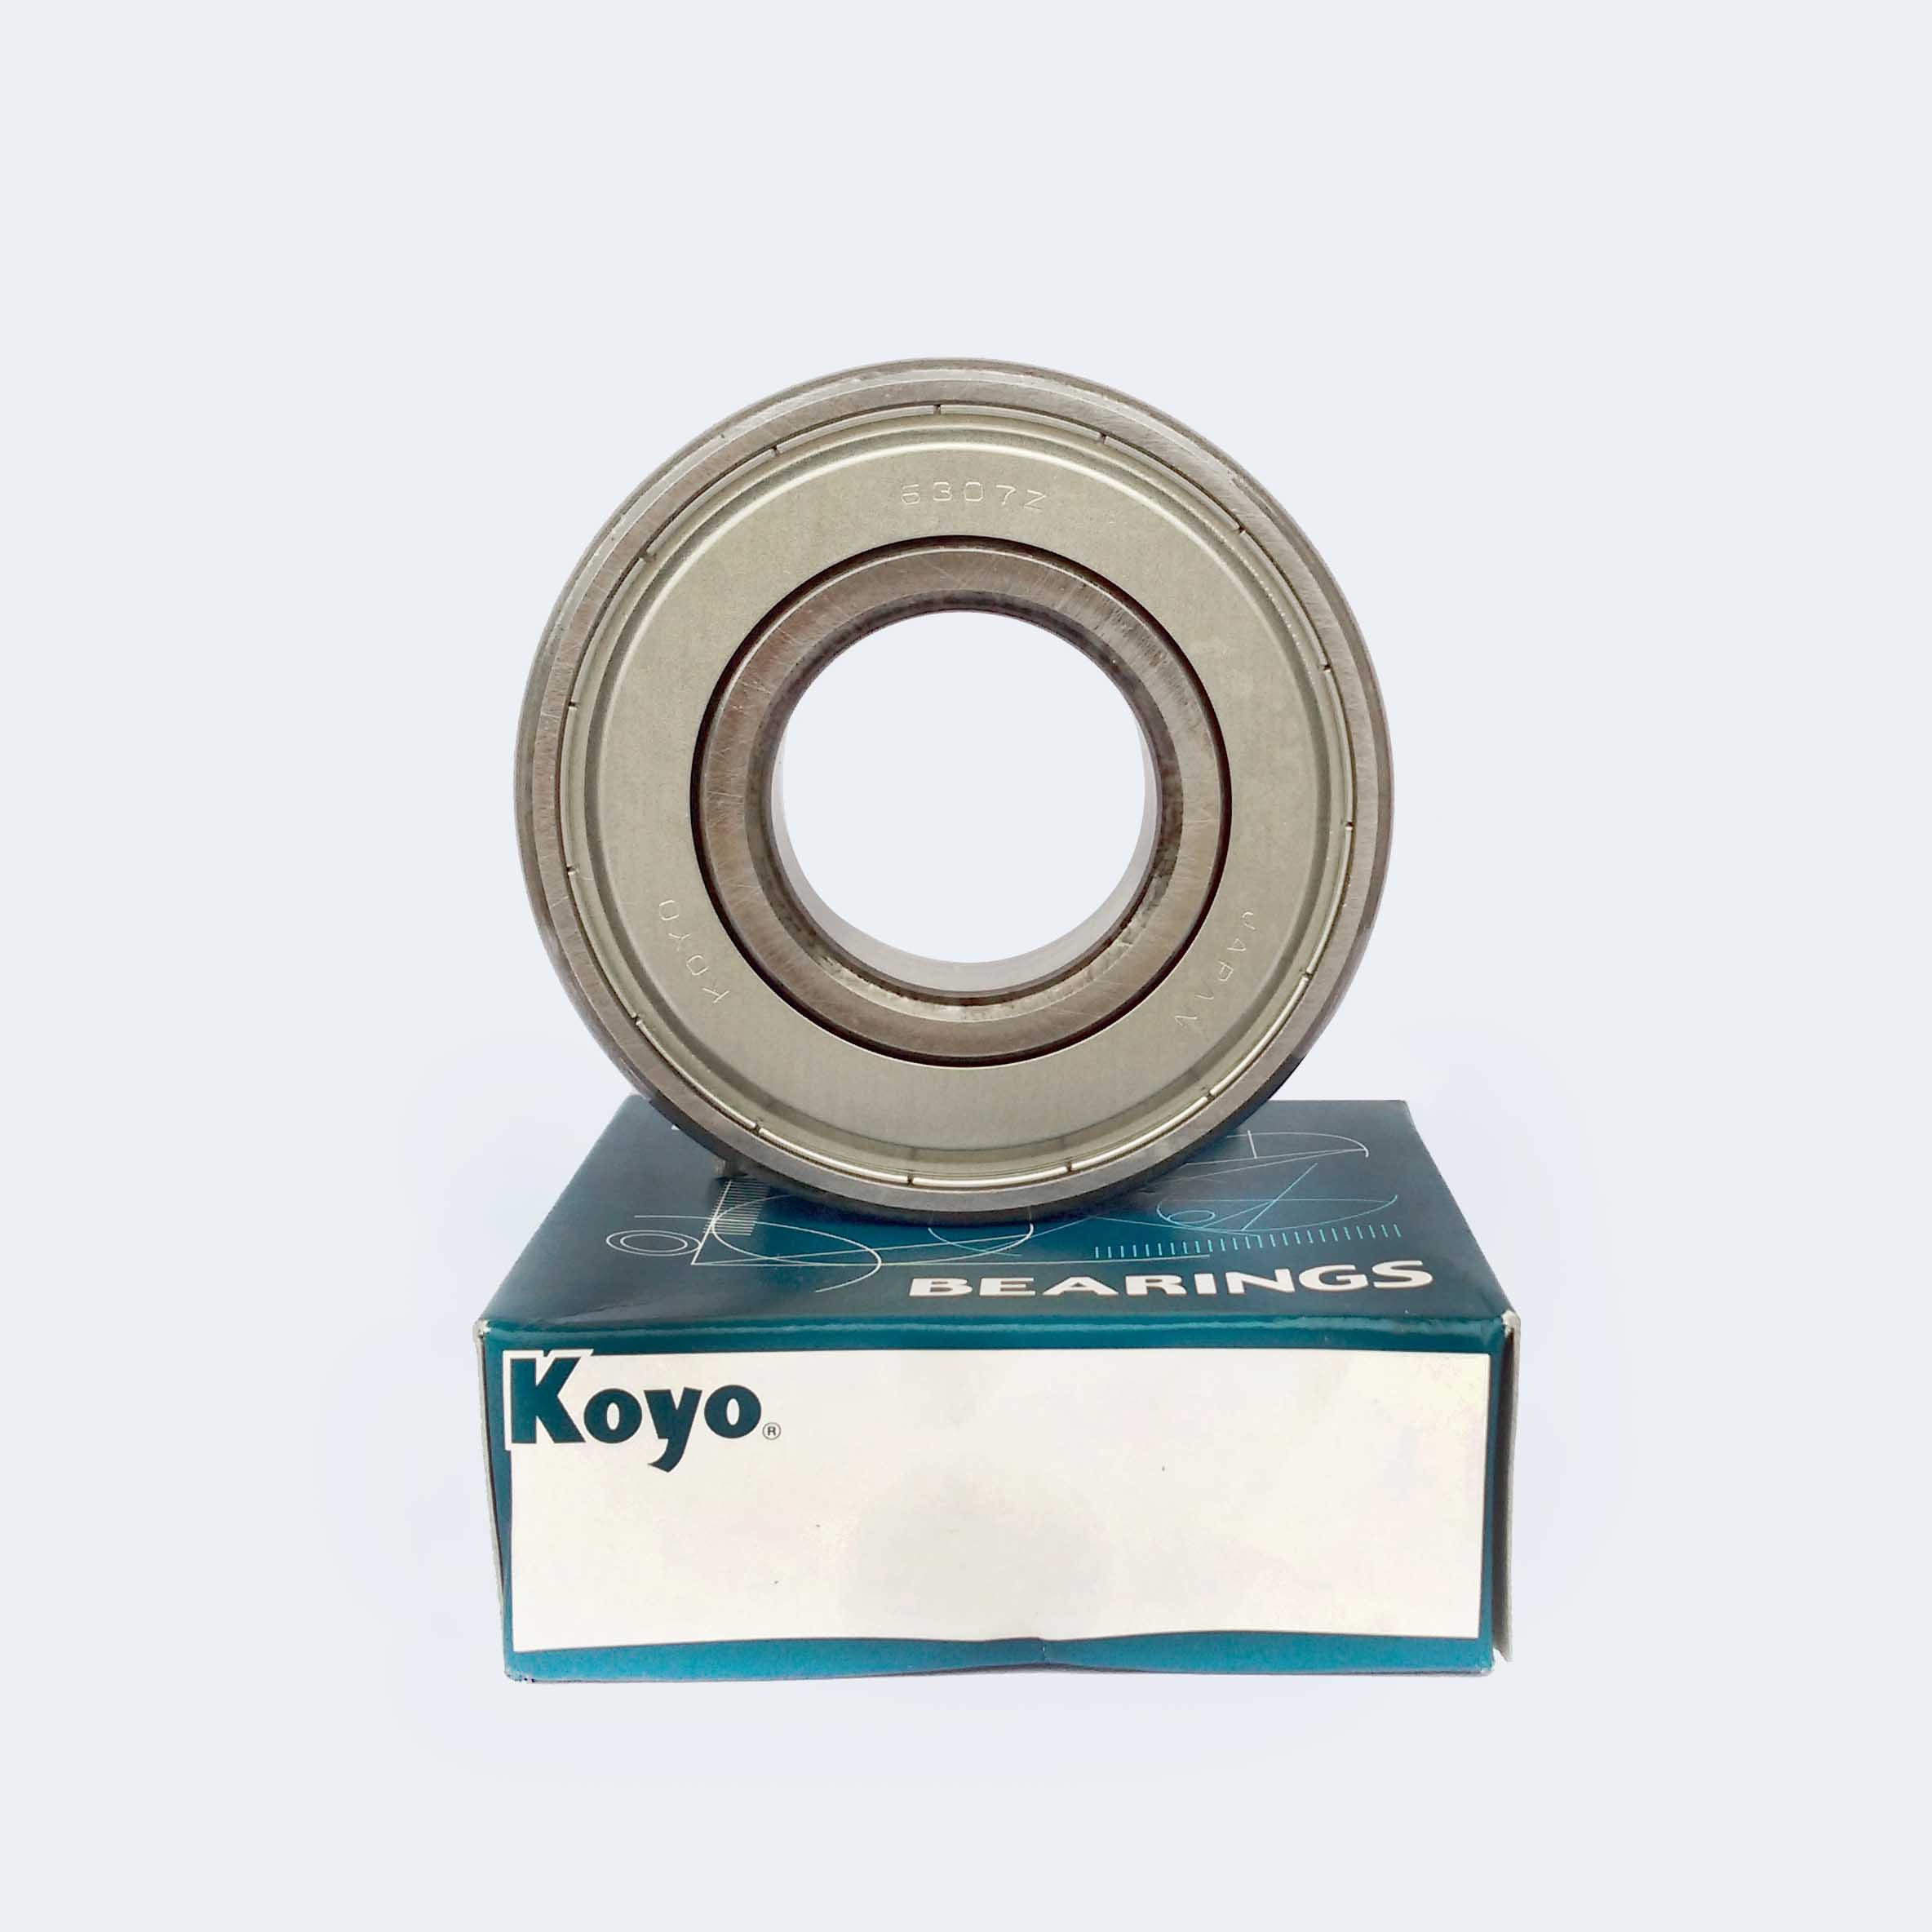 KOYO深溝球軸承,618/1.5型號參數,日本品牌進口軸承